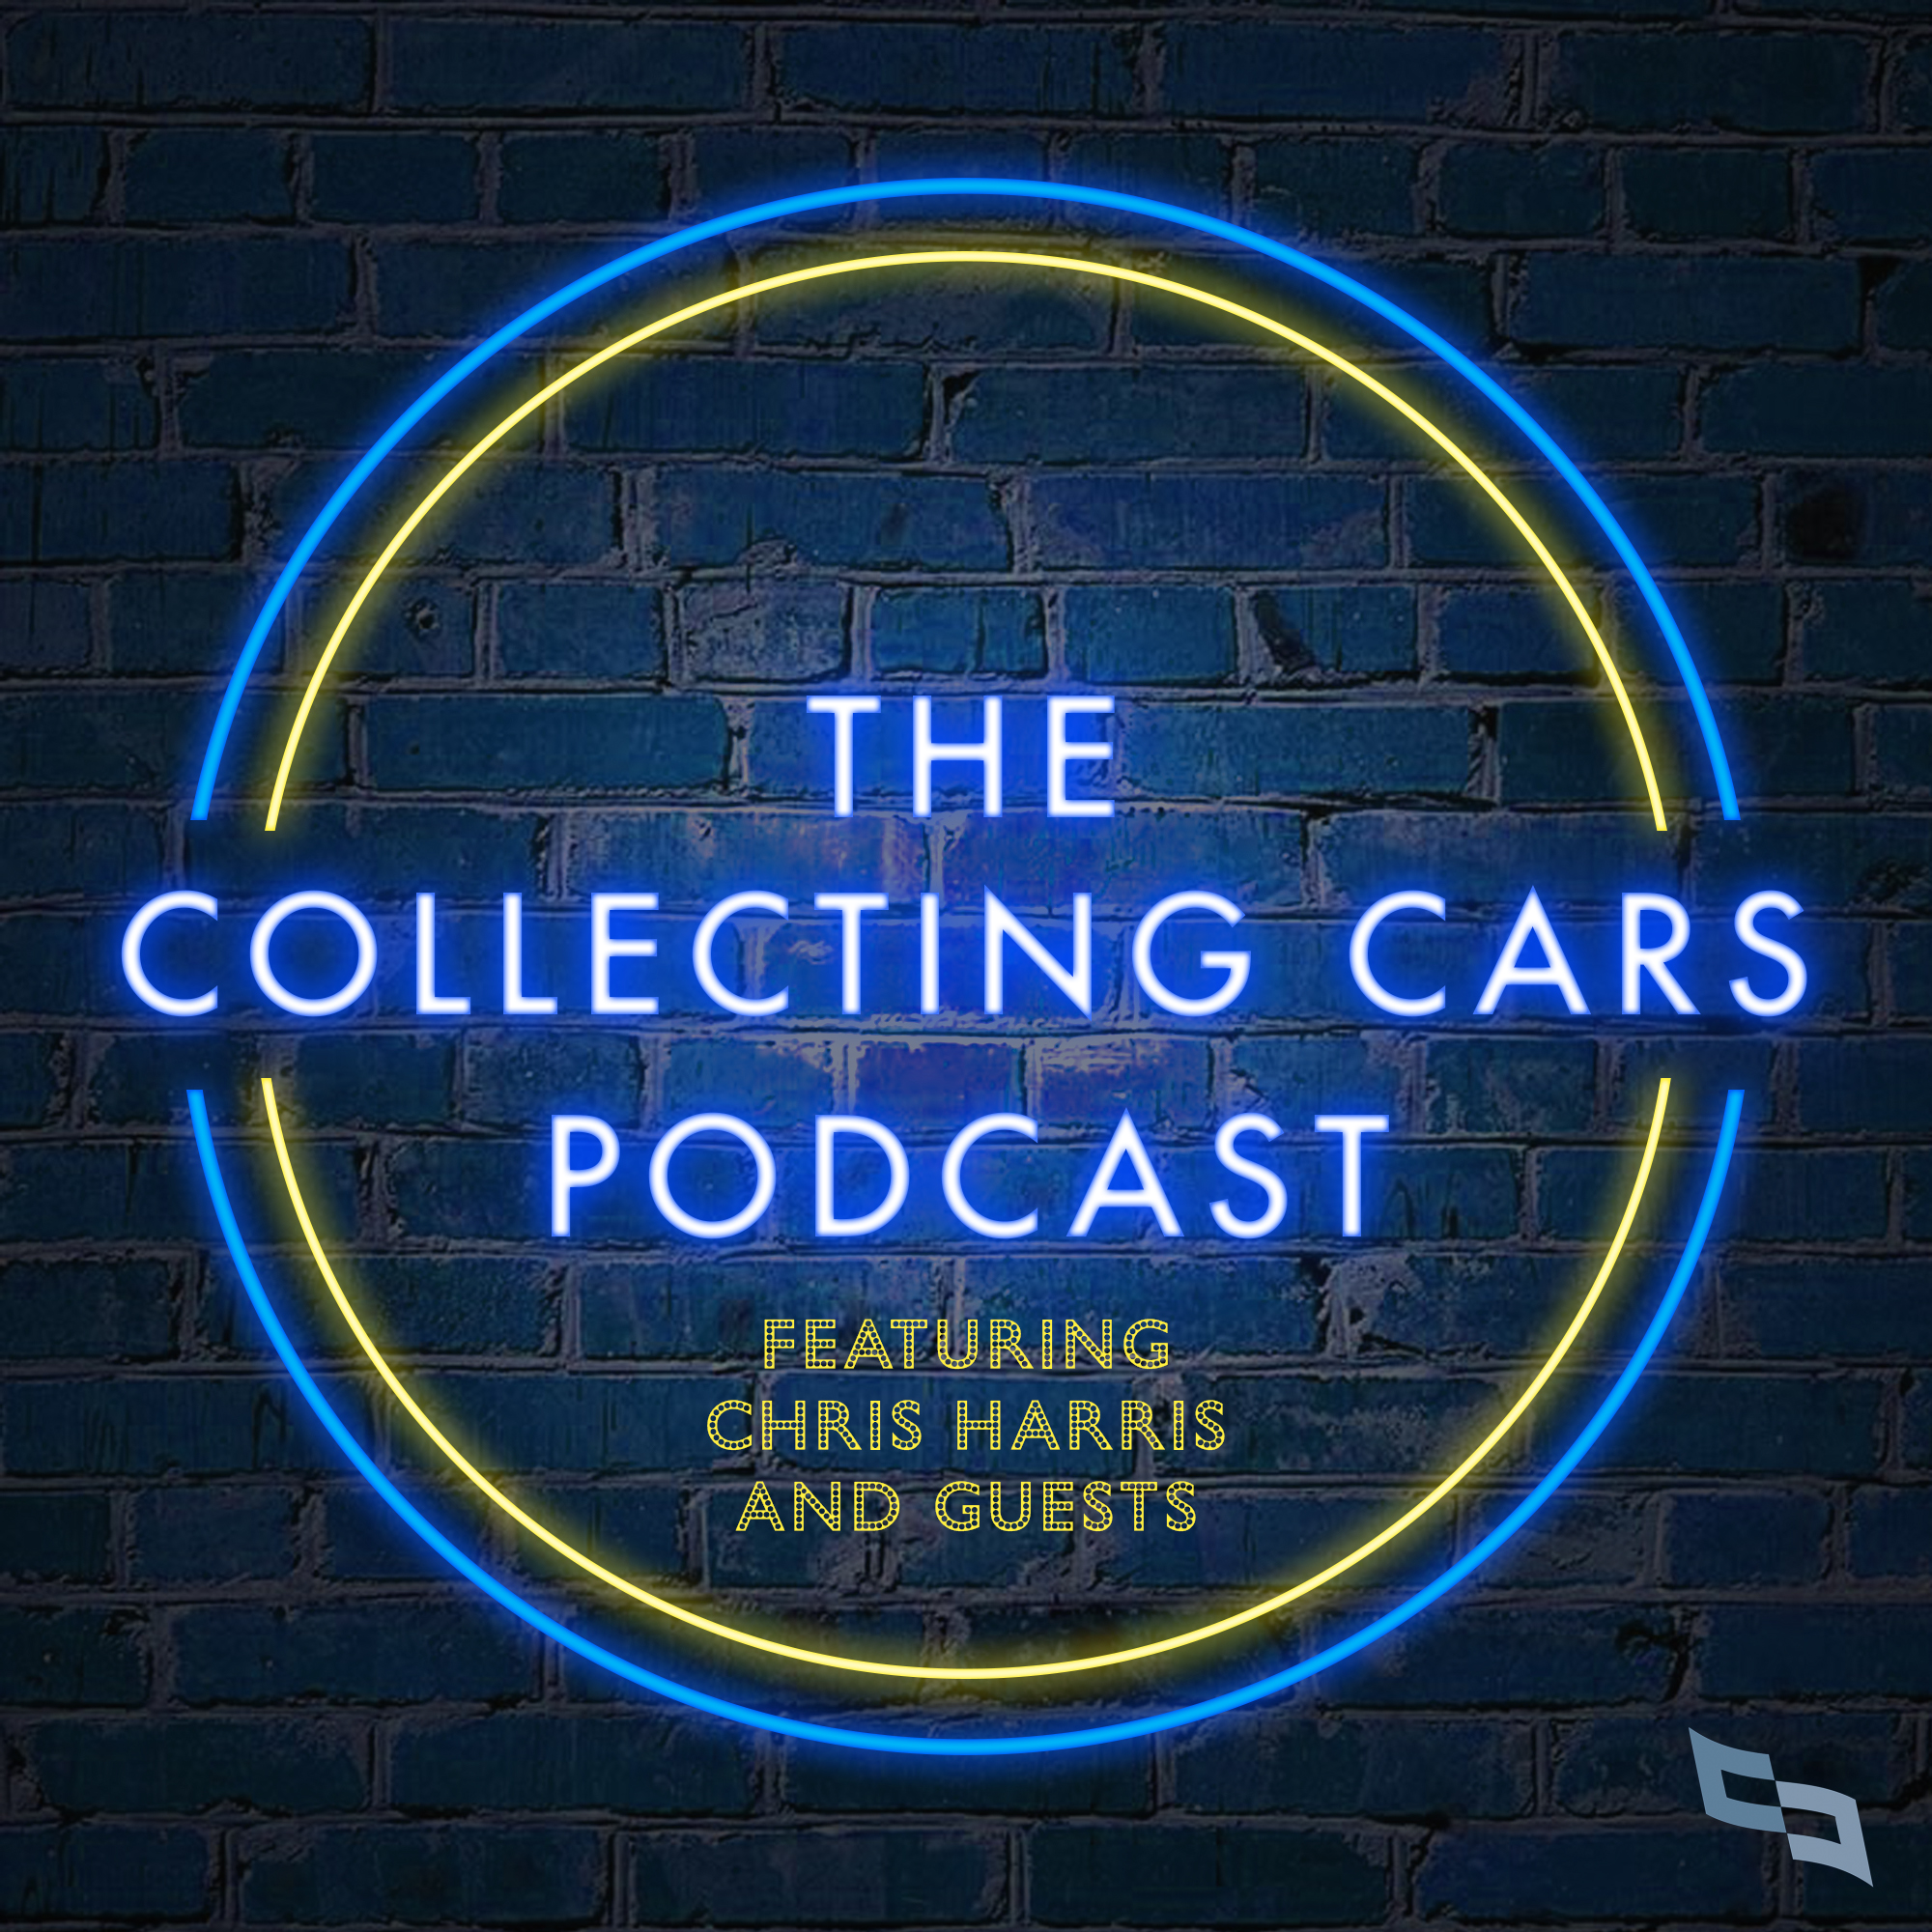 Chris Harris talks Cars with Edward Lovett